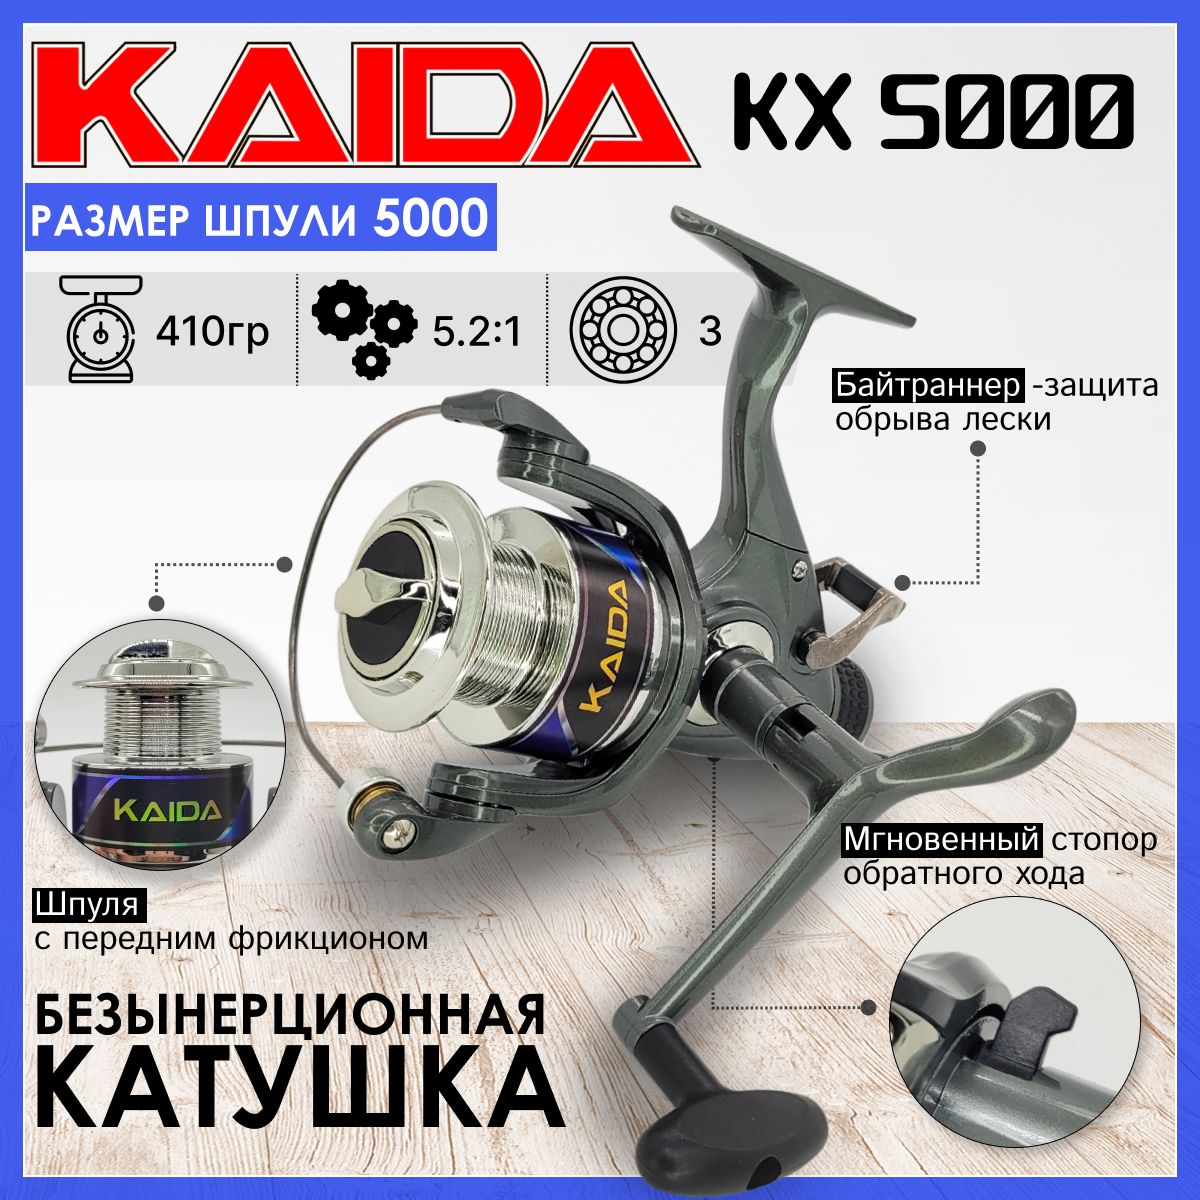 КатушкаKaidaKX5000сбайтраннеромдлярыбалкибезынерционная/катушкадляфидера